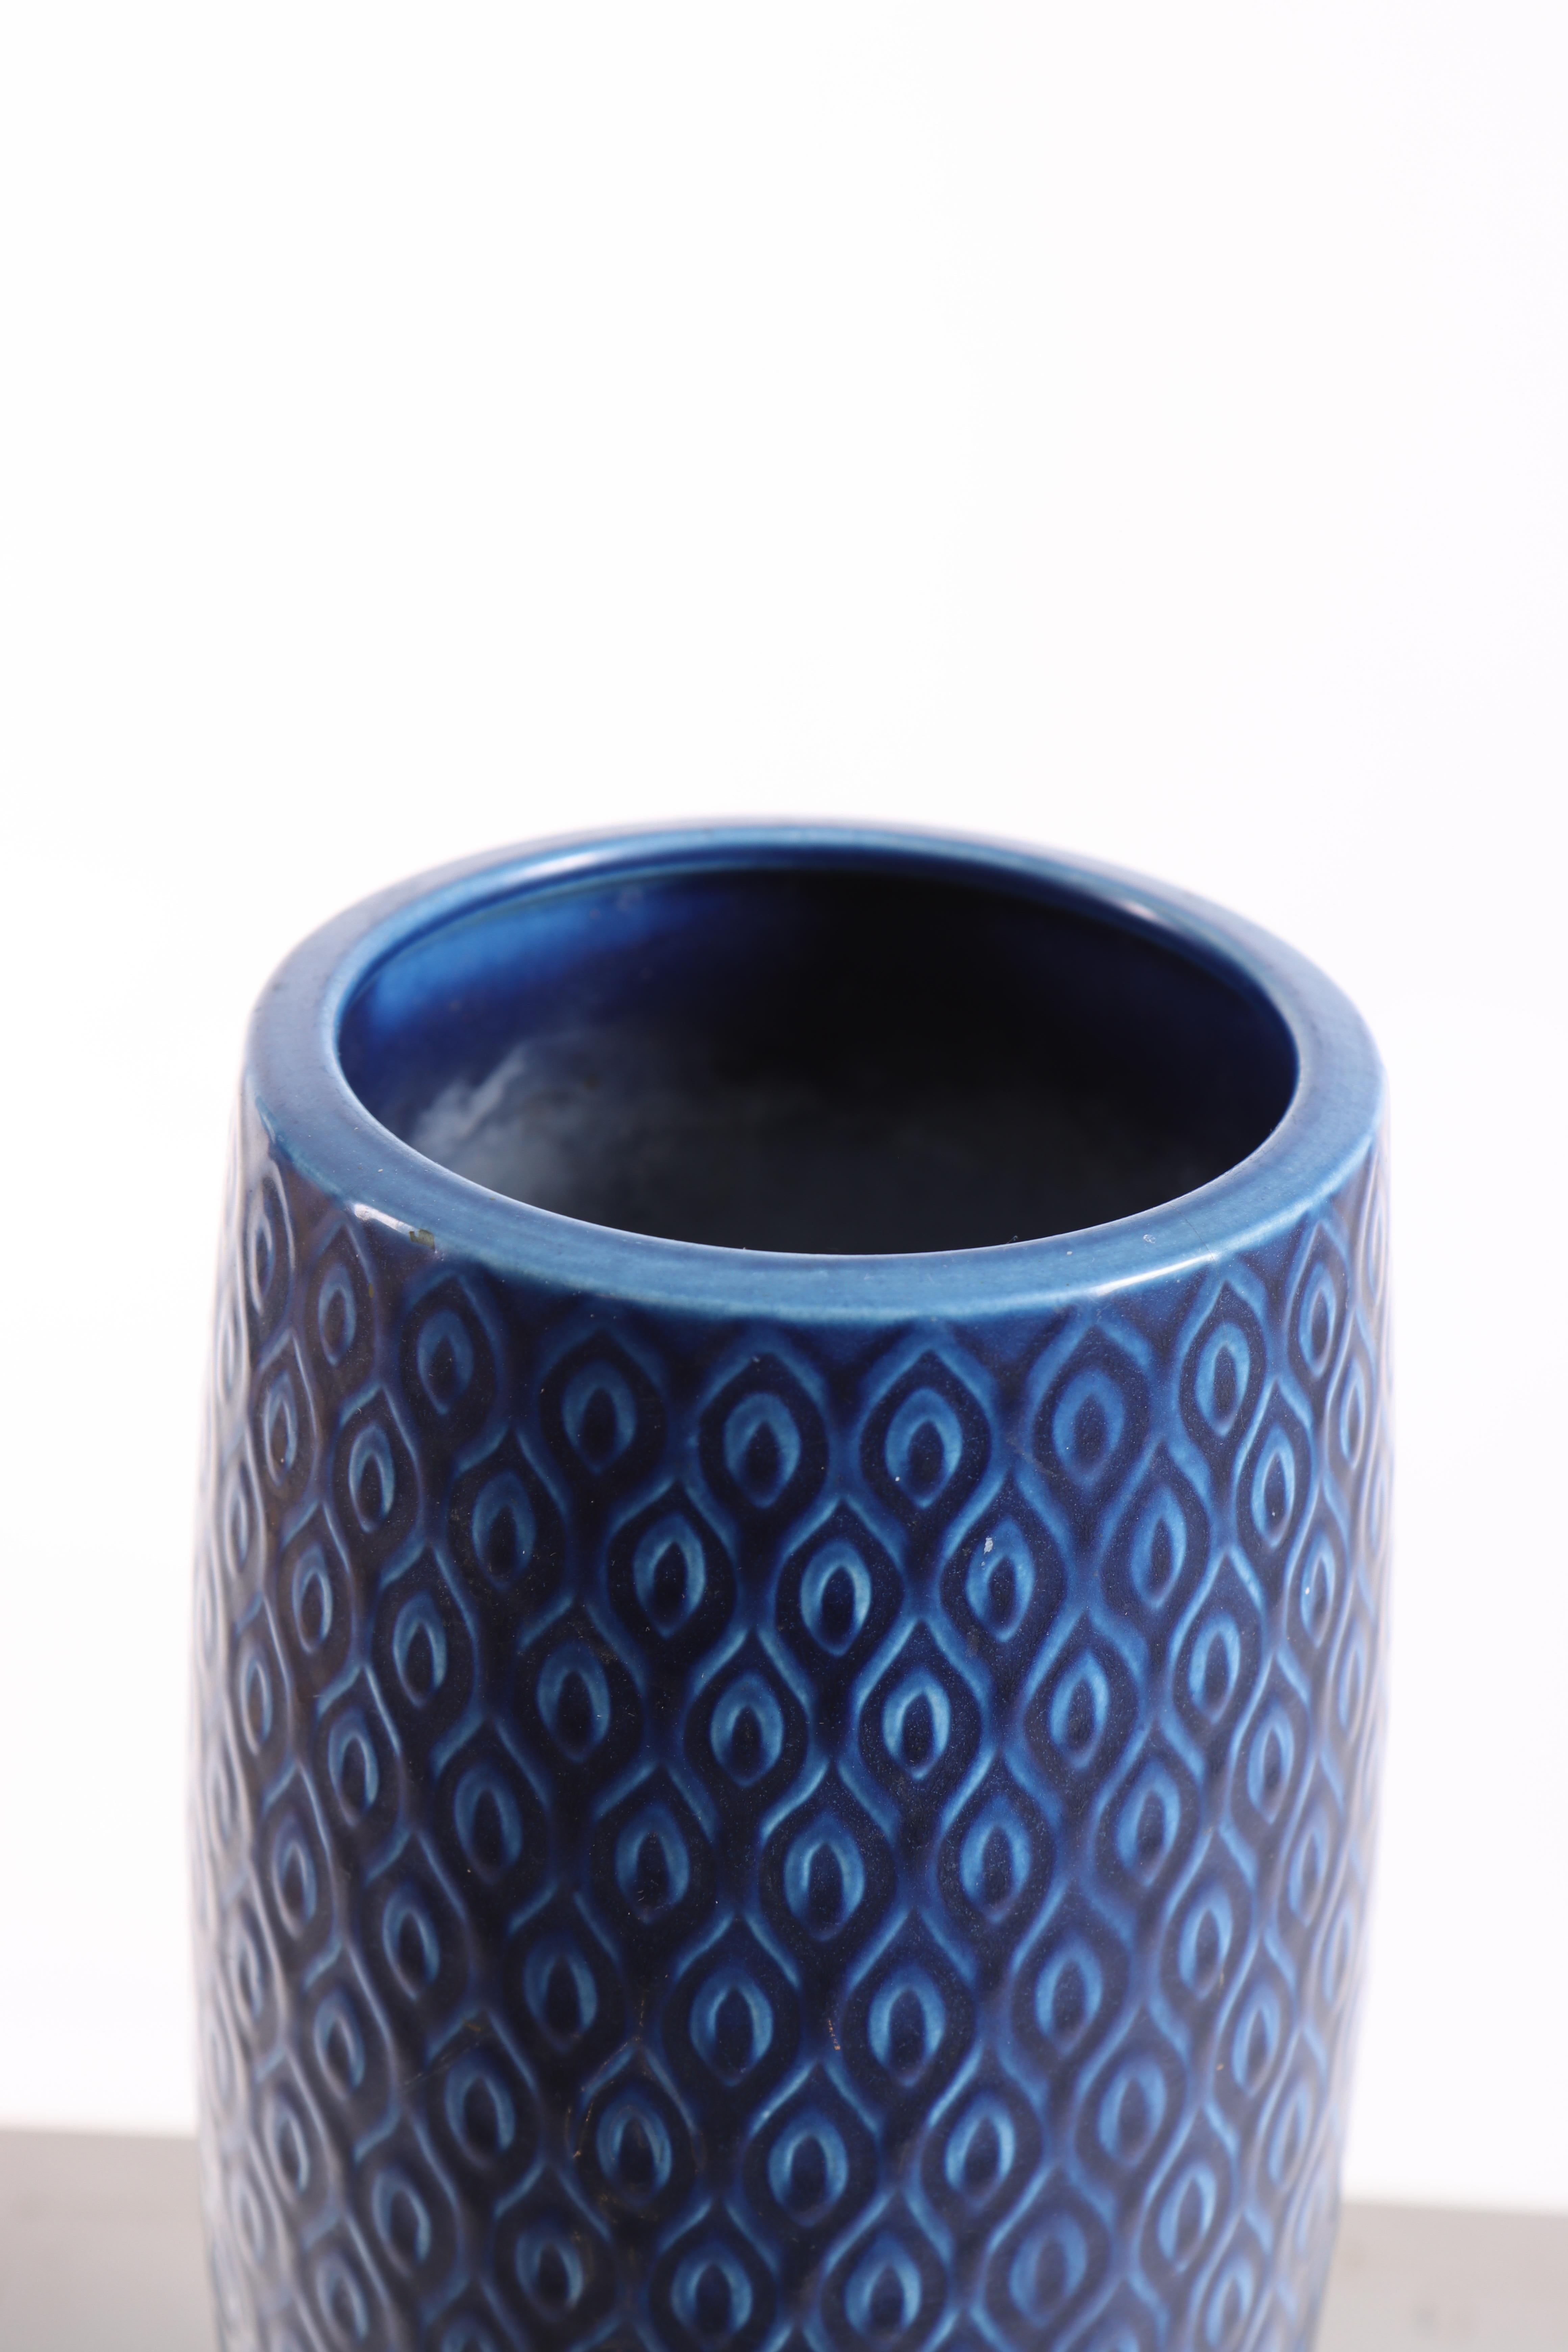 Scandinavian Modern Midcentury Vase in Porcelain by Nils Thorsson, Denmark, 1960s For Sale